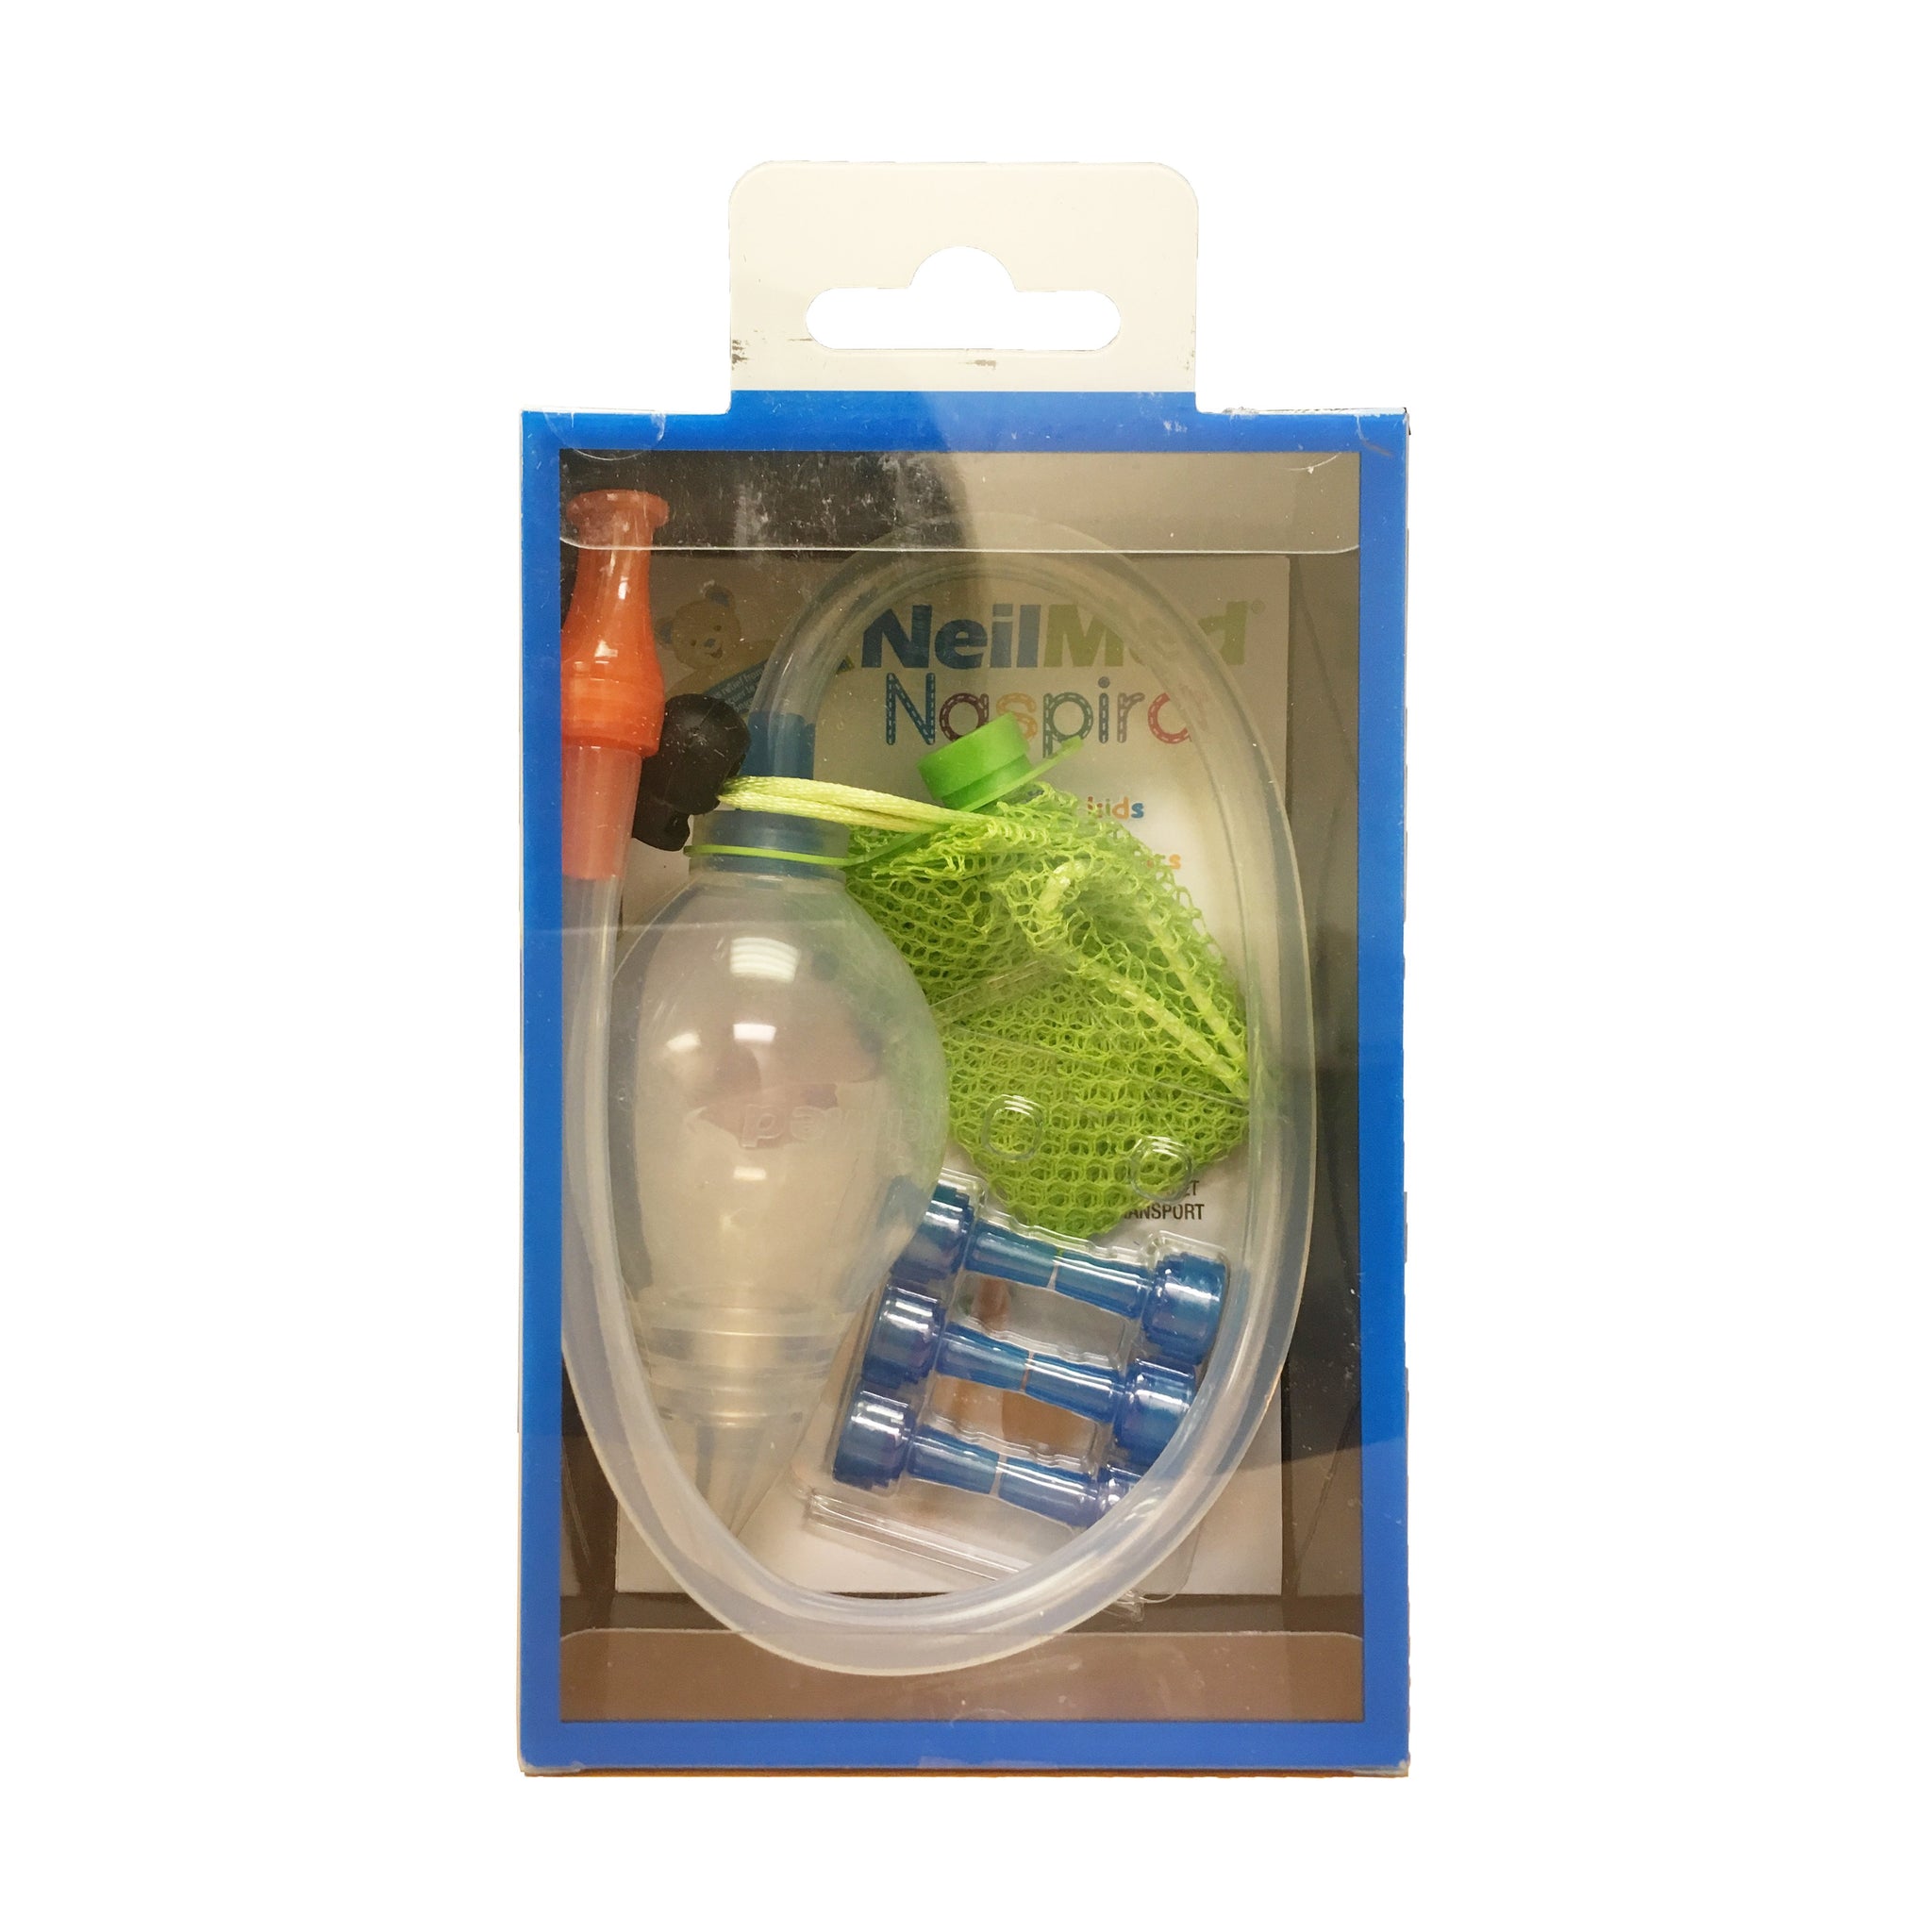 NeilMed Naspira Plus Nasal Oral Aspirator – Pete's Baby Essentials